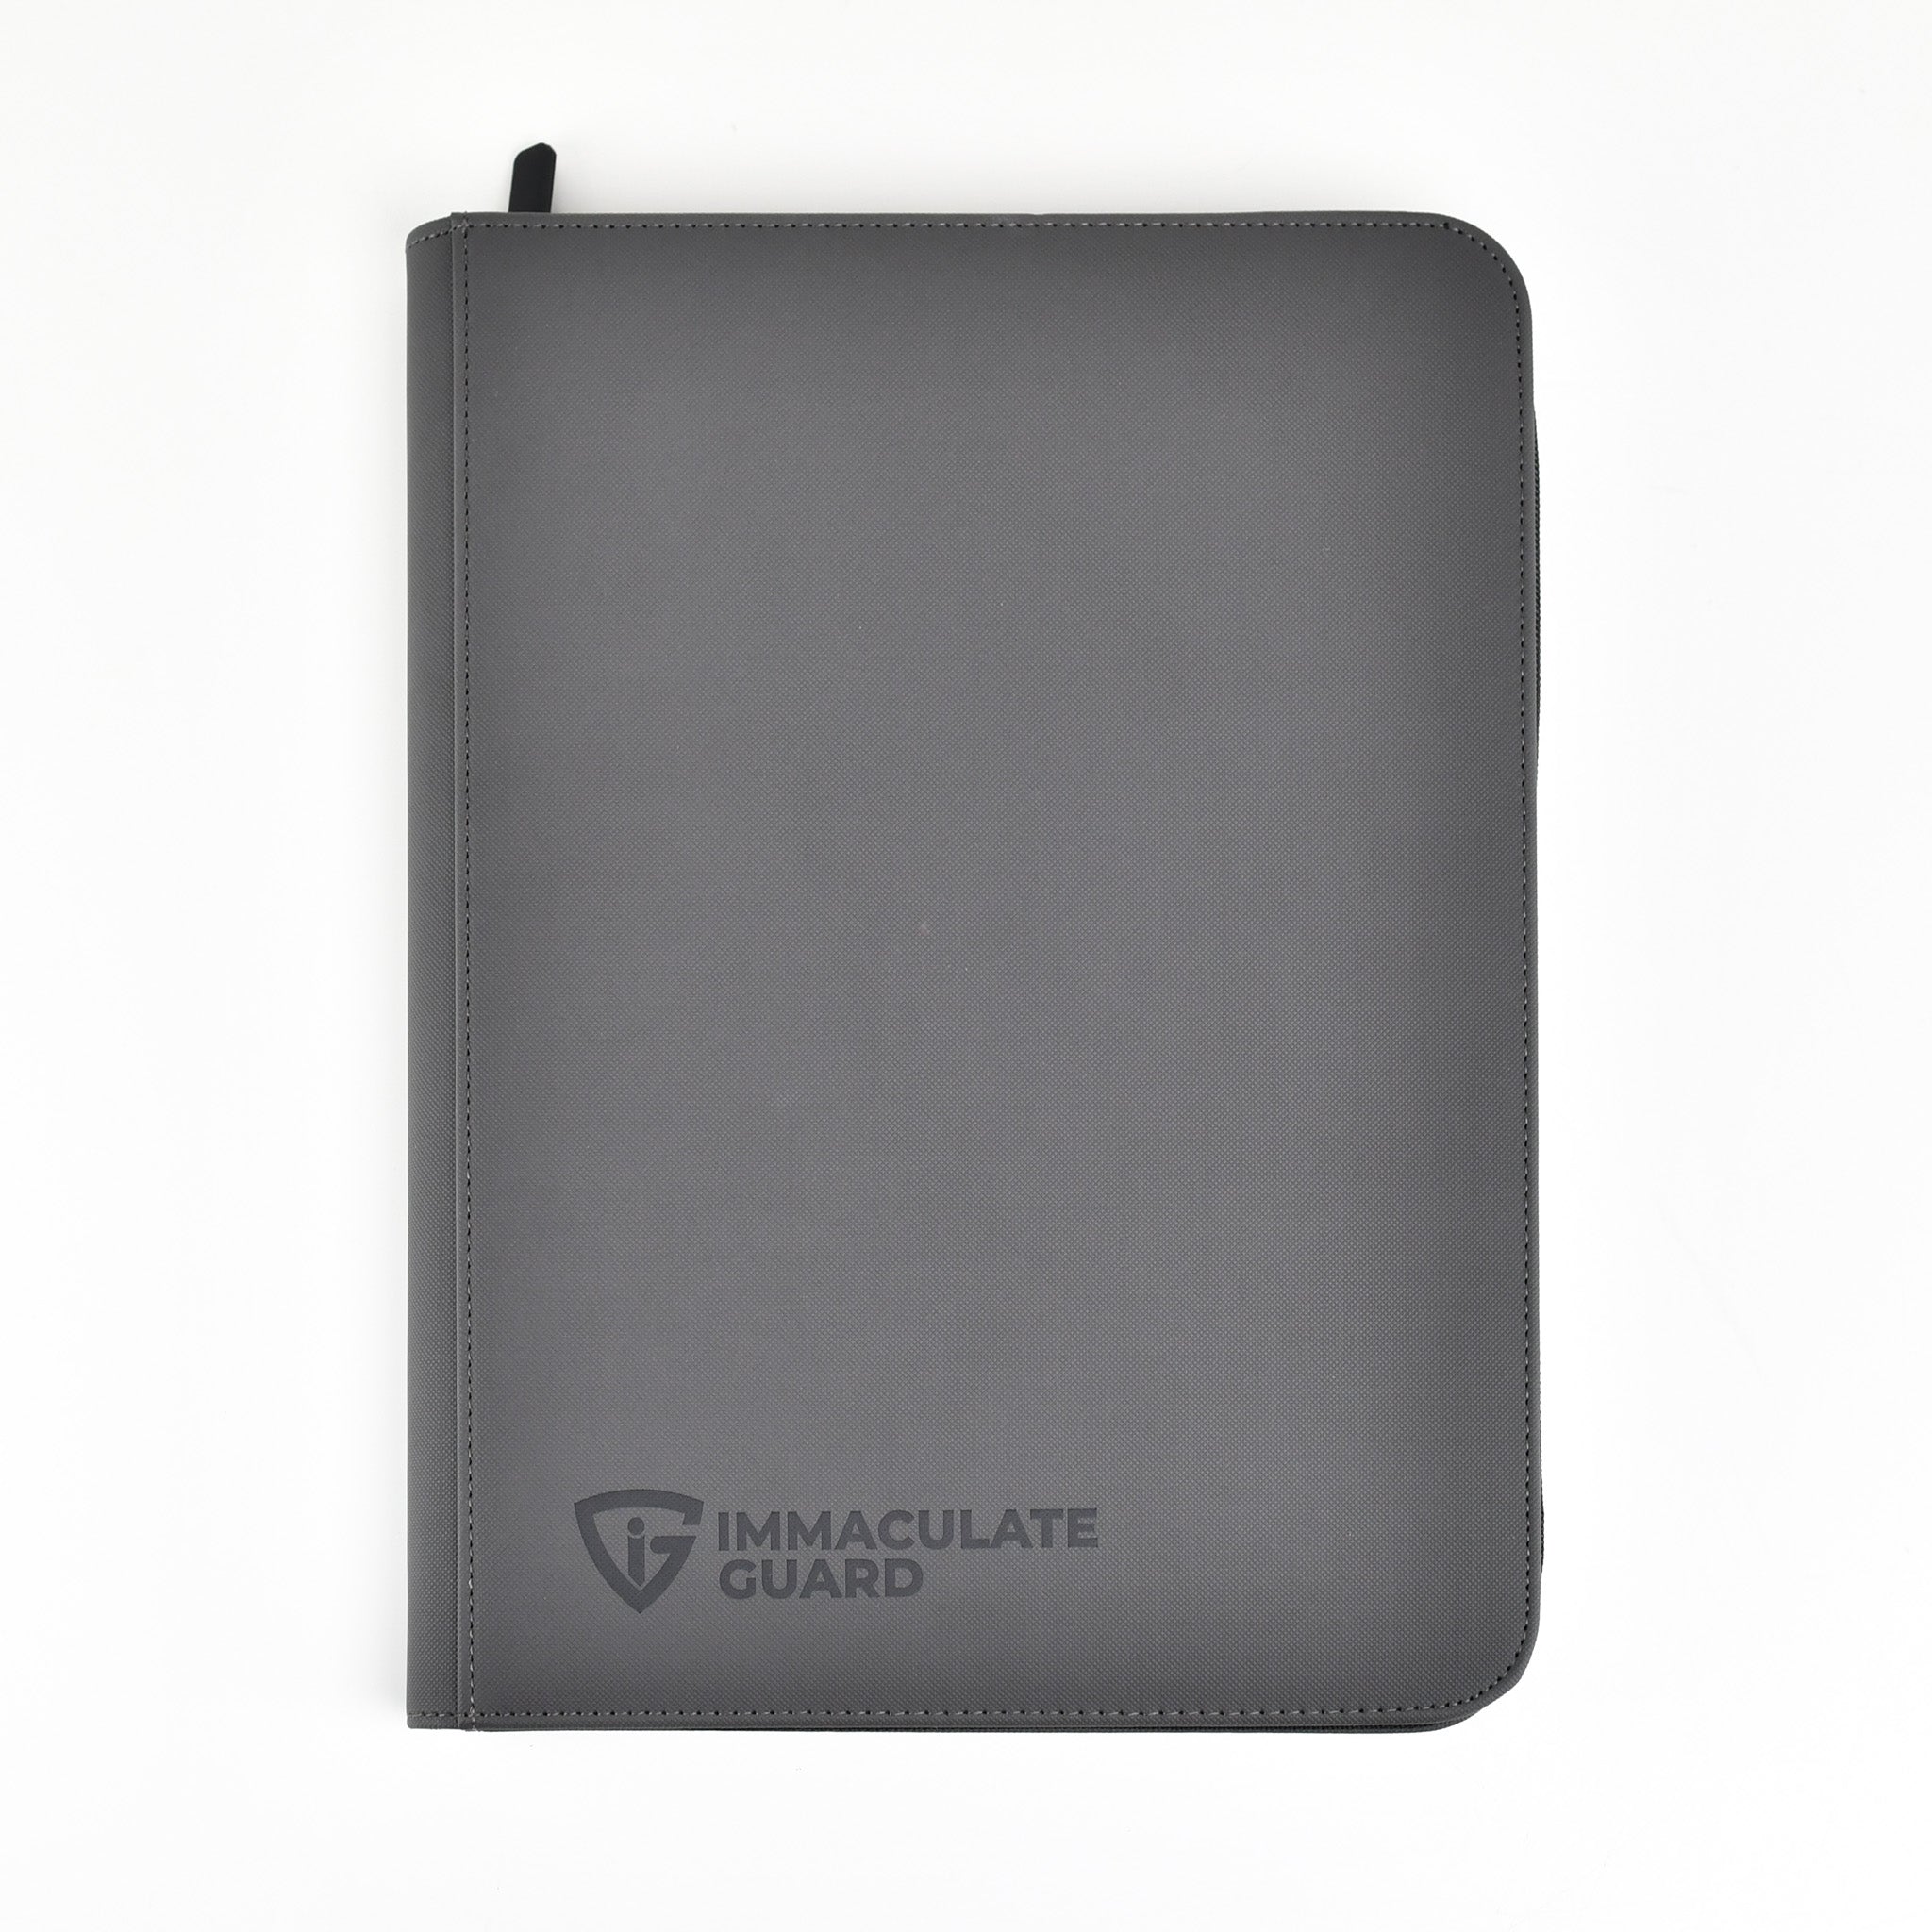 Binder - Immaculate Guard Side Loading 9 Pocket - Premium Leather: Grey